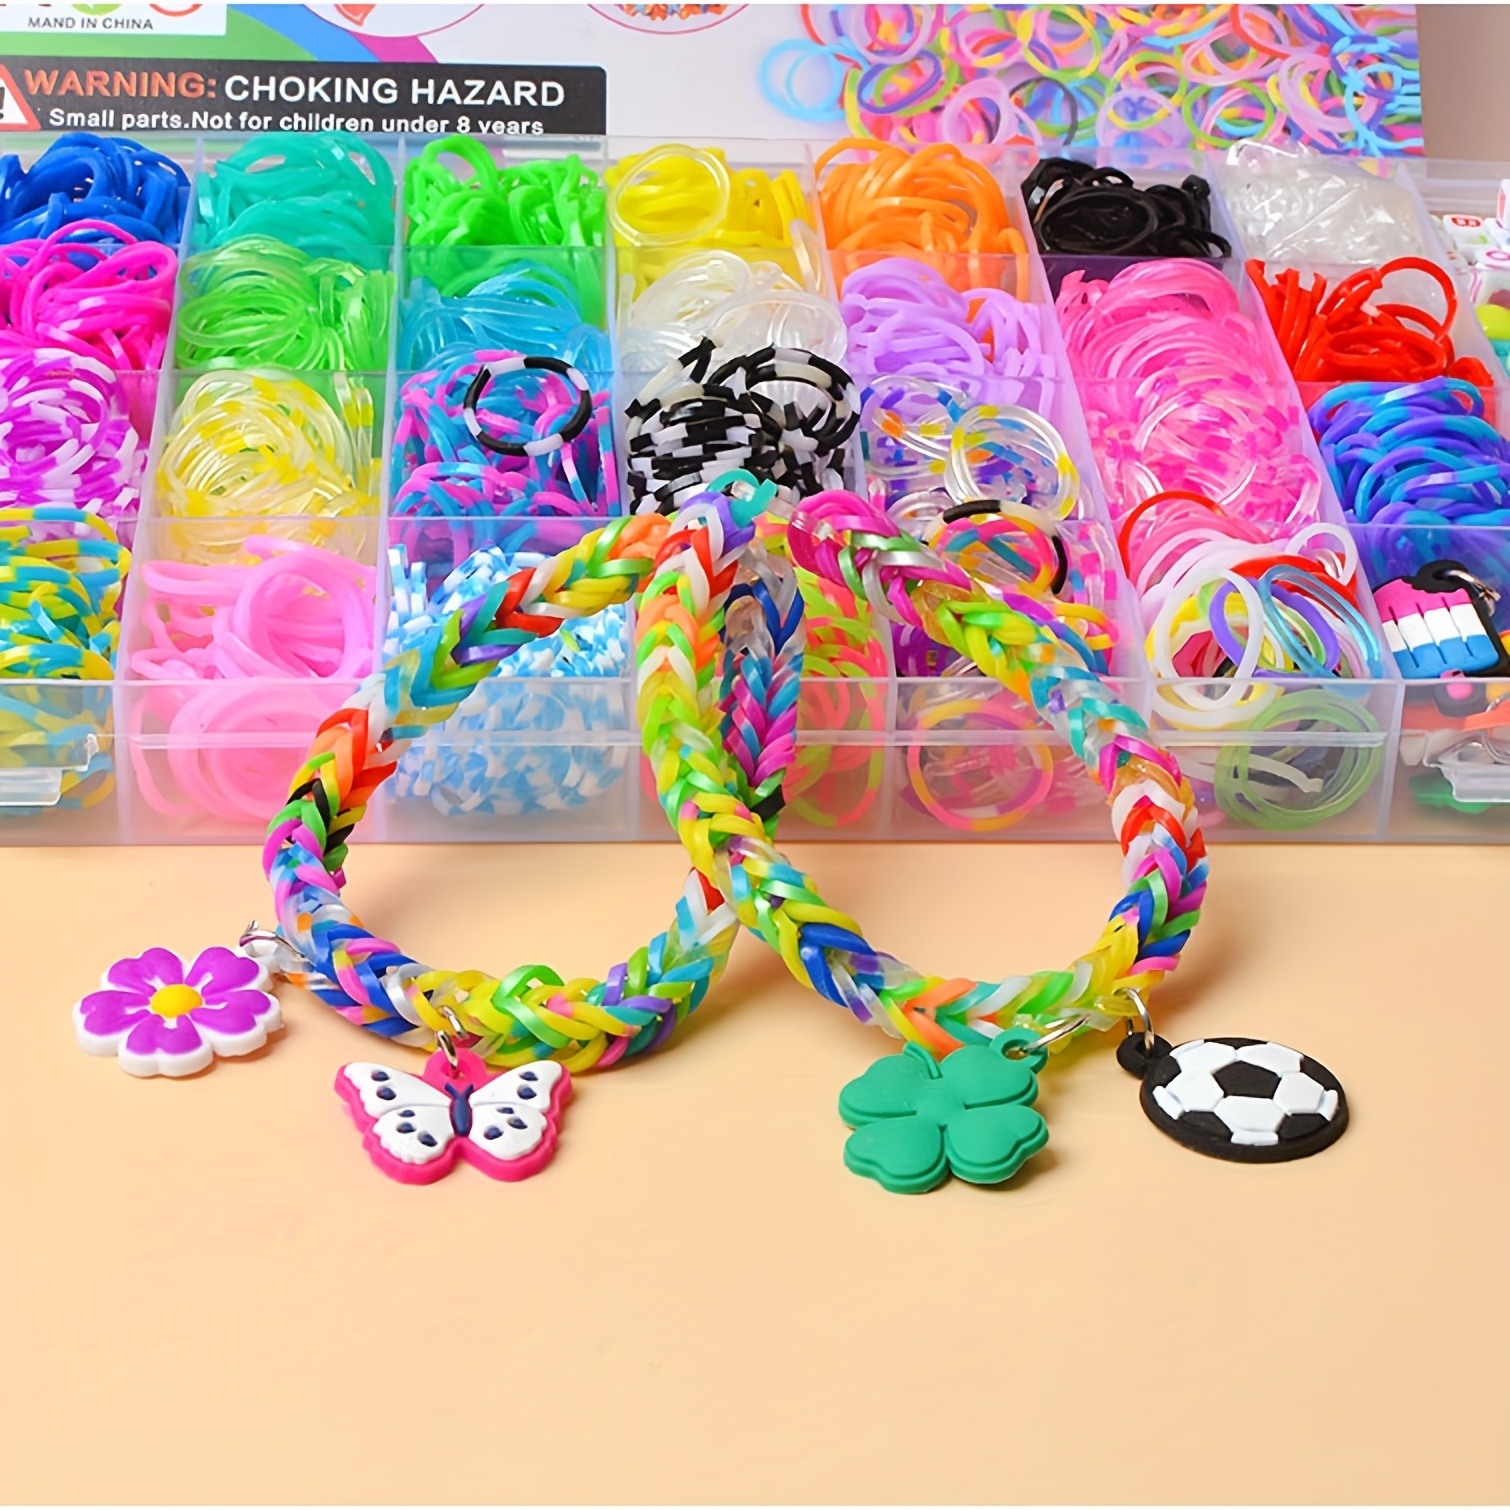 1 set/box Rubber Loom Band Bracelet Kit Colorful Beads&Tool Set for DIY  Jewery Making Girls Friendship Bracelets Christmas Gifts